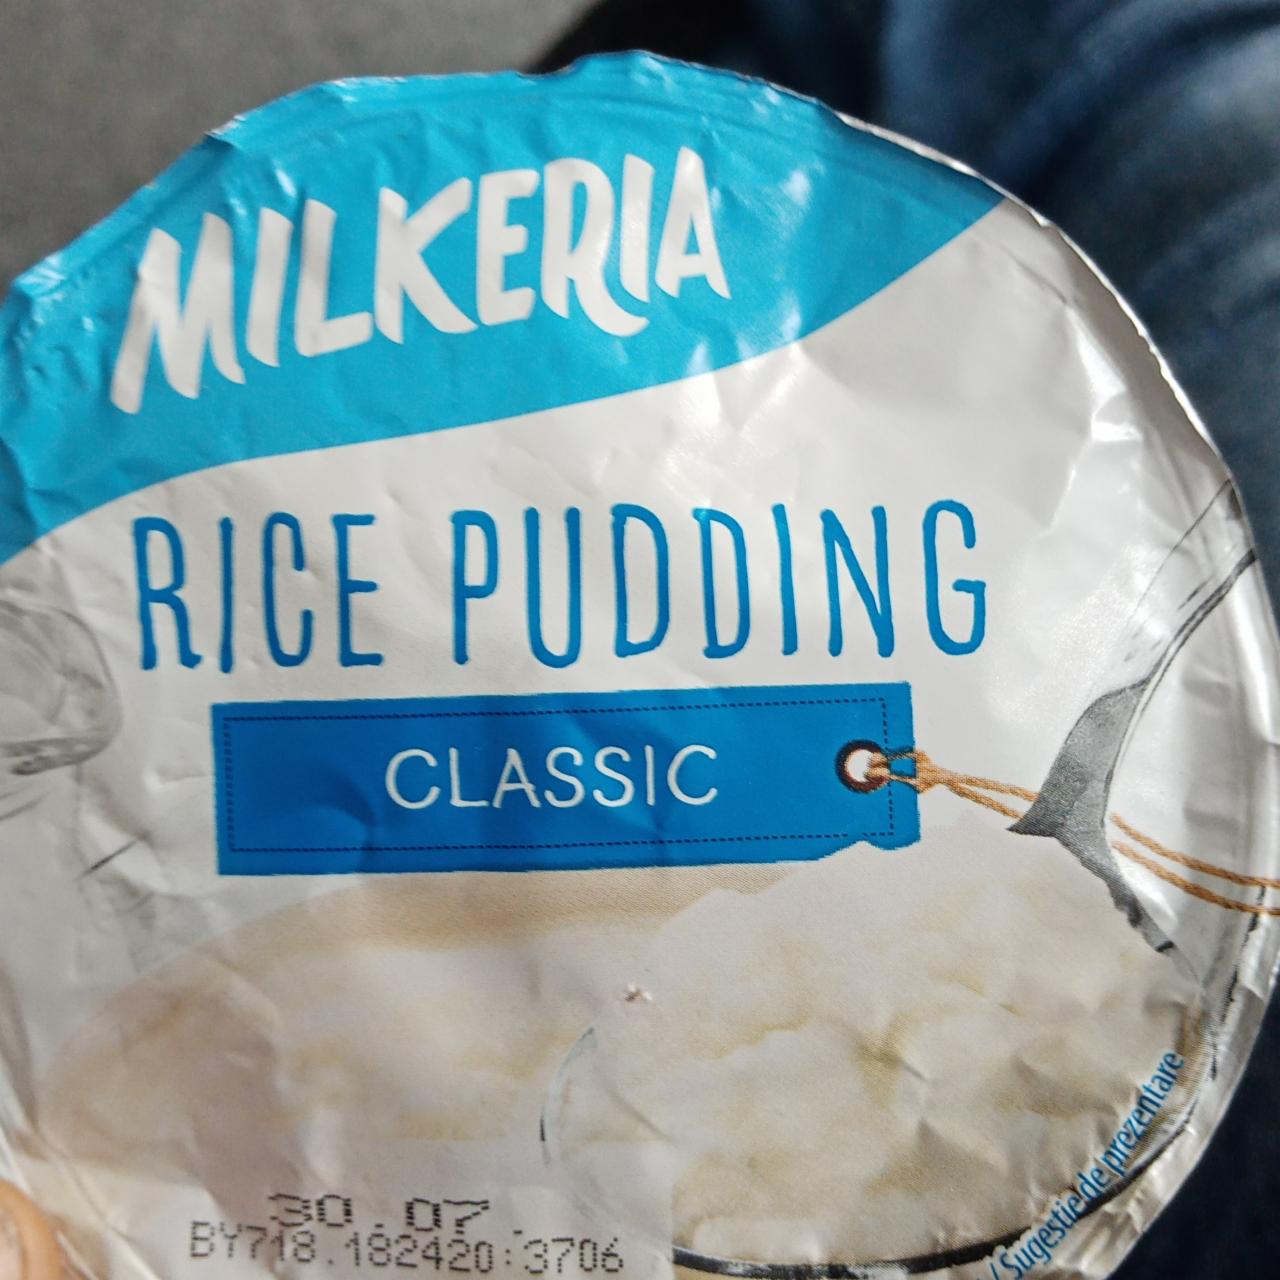 Képek - Rice pudding classic Milkeria